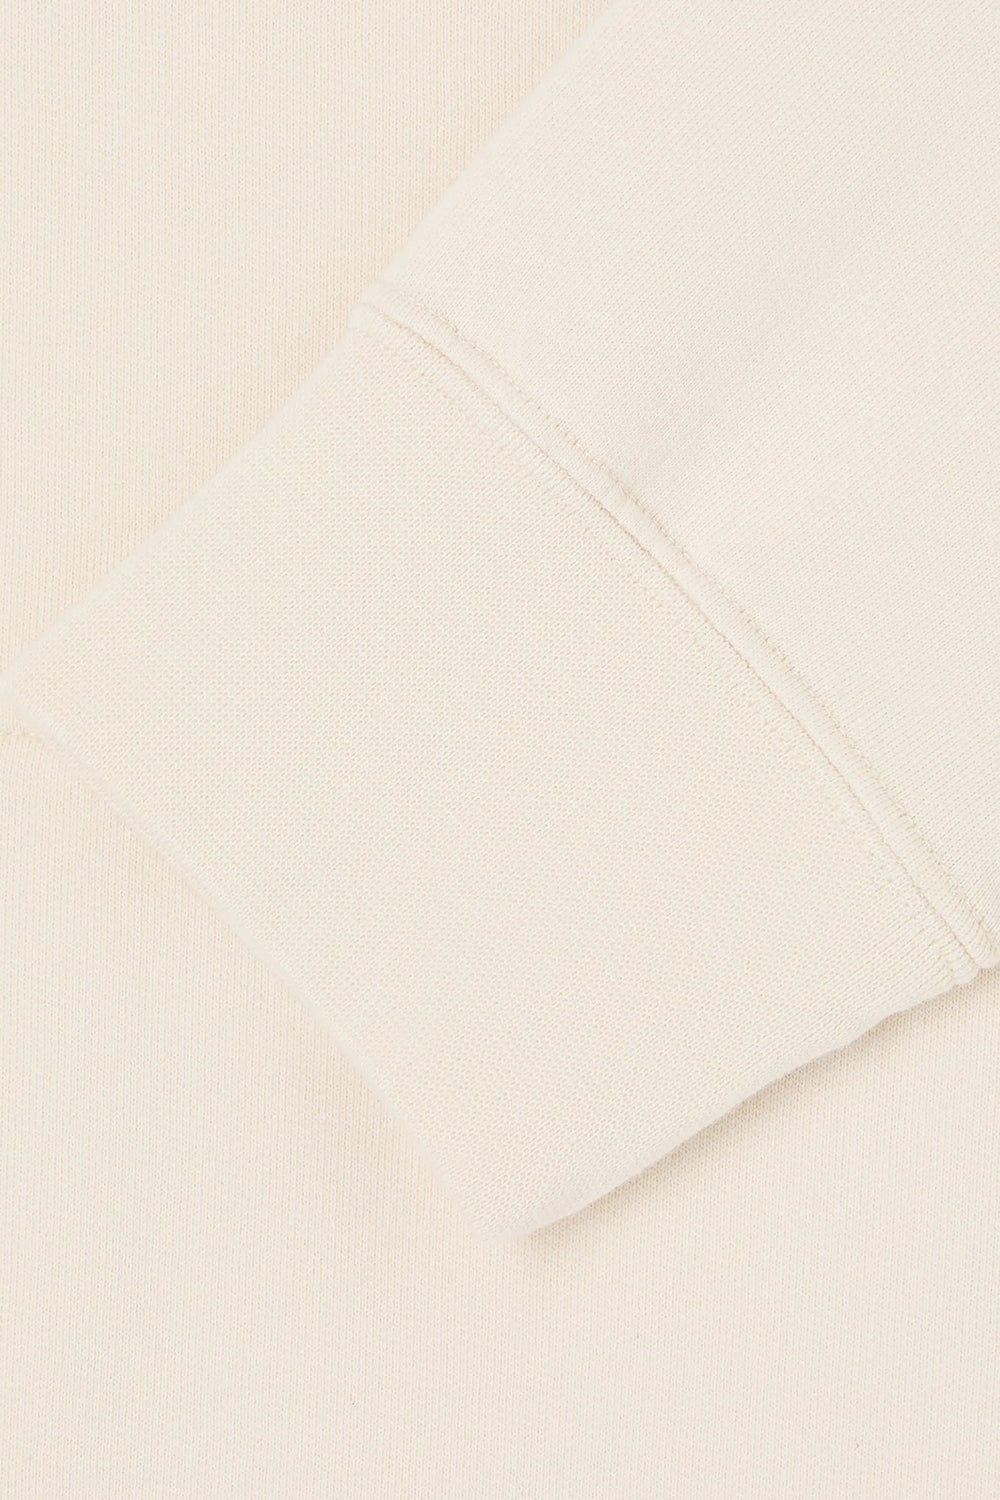 Edwin Japanese Sun Hooded Sweatshirt (Whisper White)